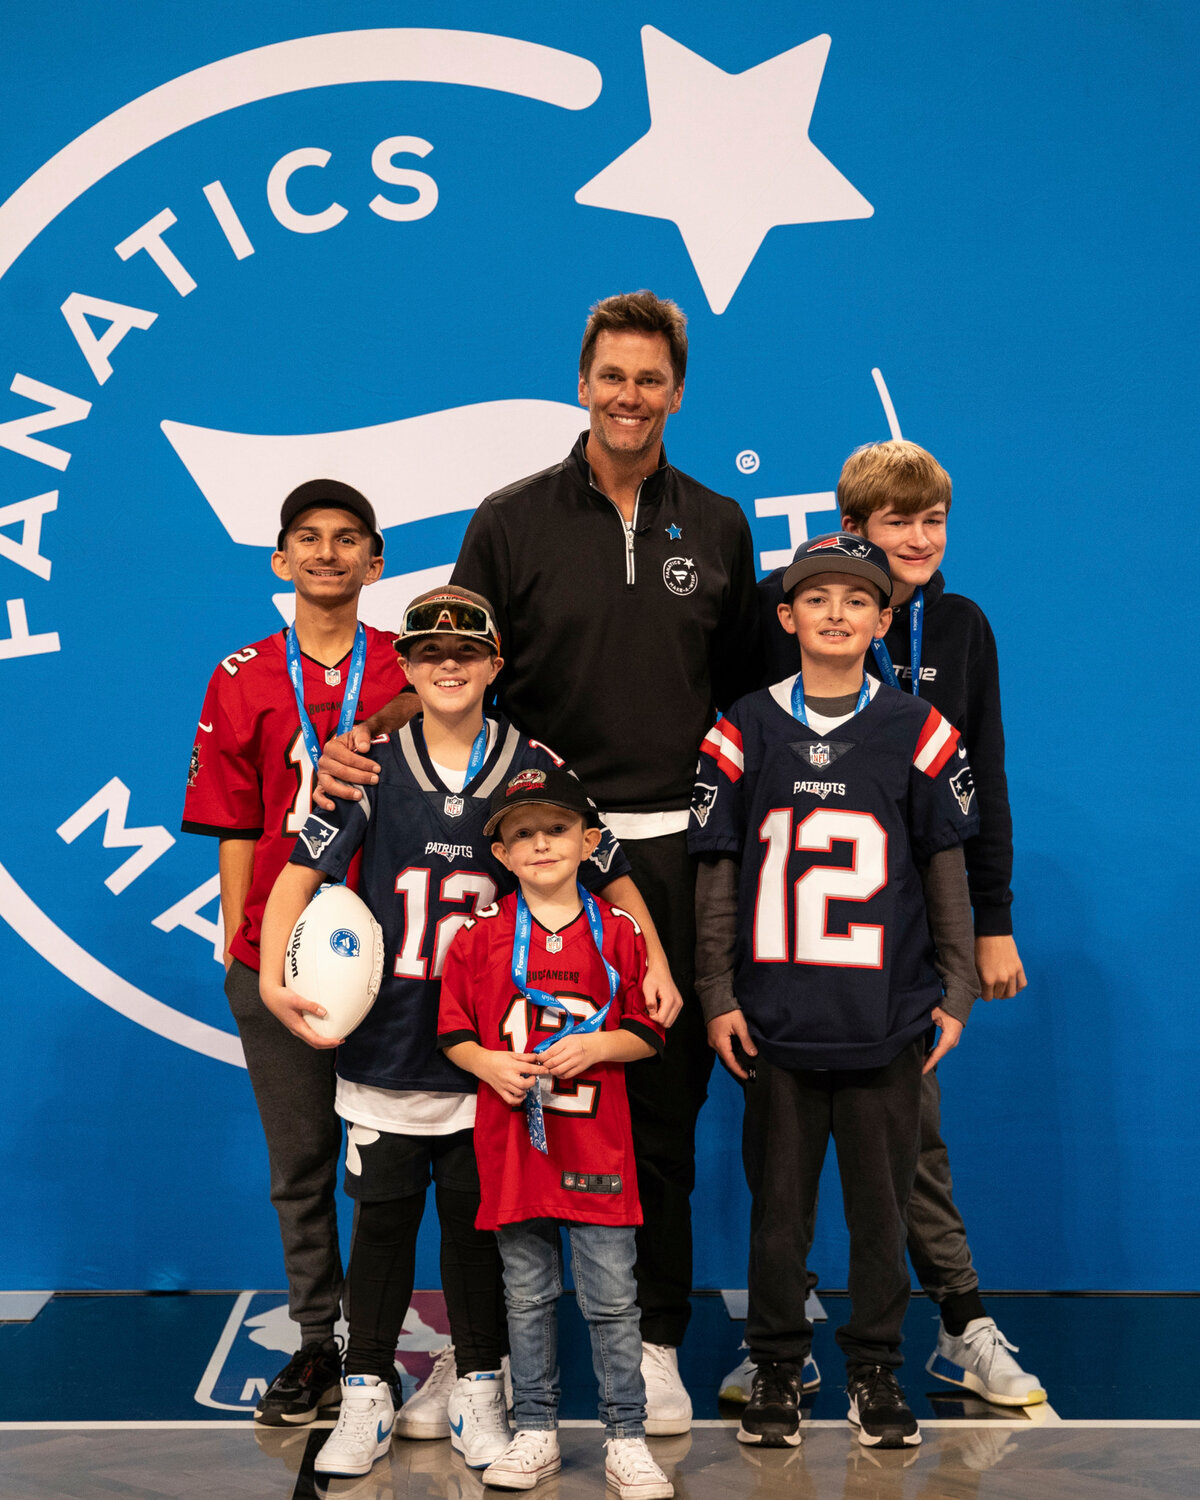 Jax and other recipients of Maek-A-Wish meeting Tom Brady.